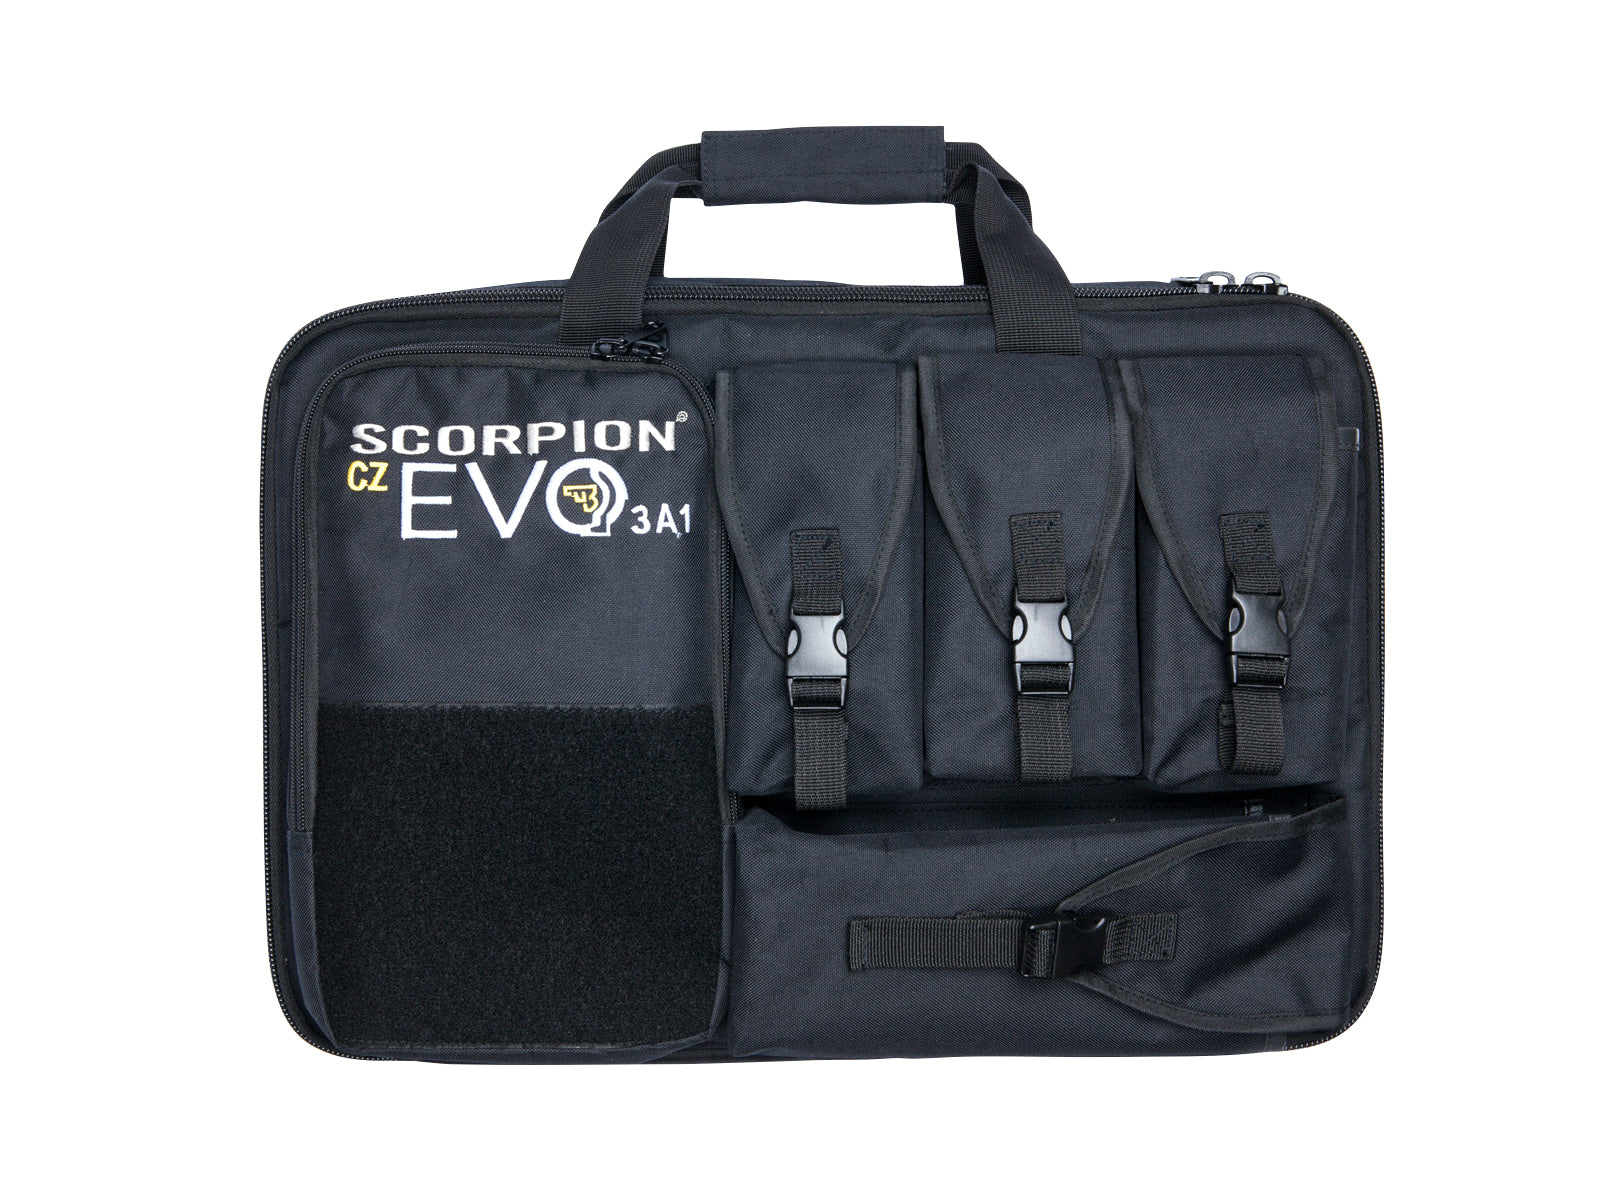 CZ Scorpion EVO 3 A1, bag w. custom foam inlay - Ultimateairsoft fun guns cqb airsoft 